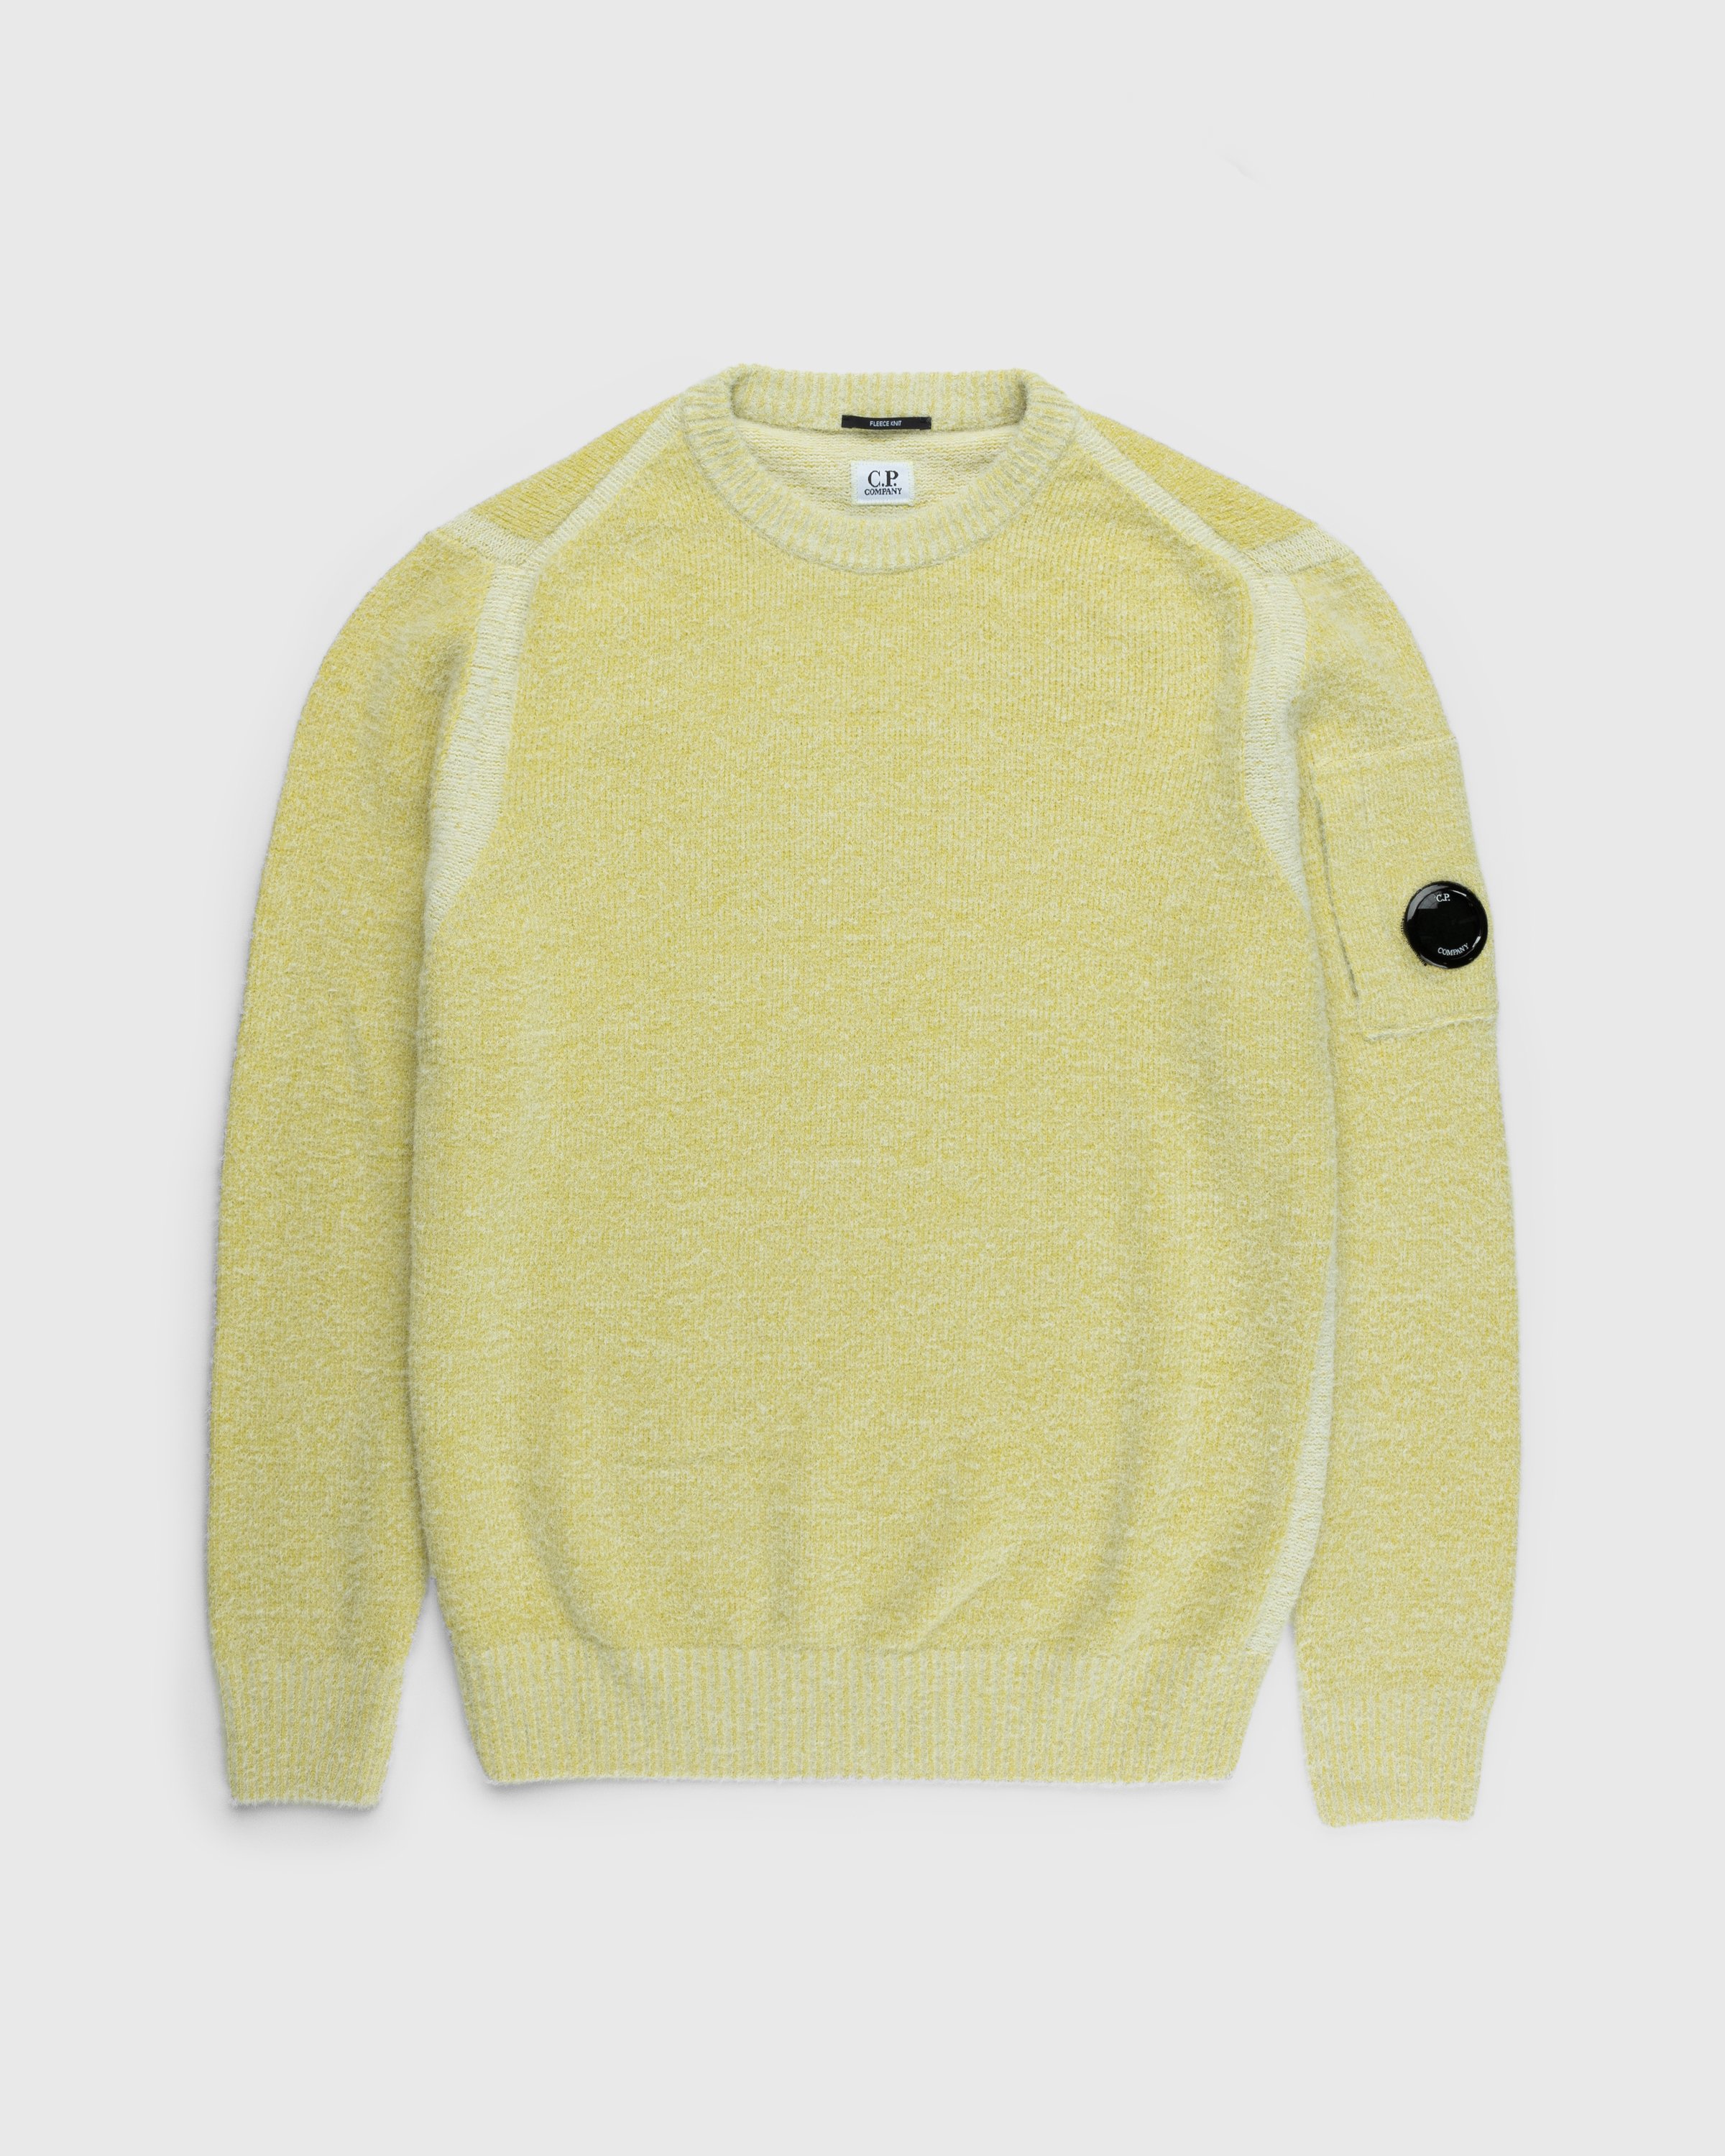 C.P. Company - Fleece Knit Jumper Yellow - Clothing - Yellow - Image 1